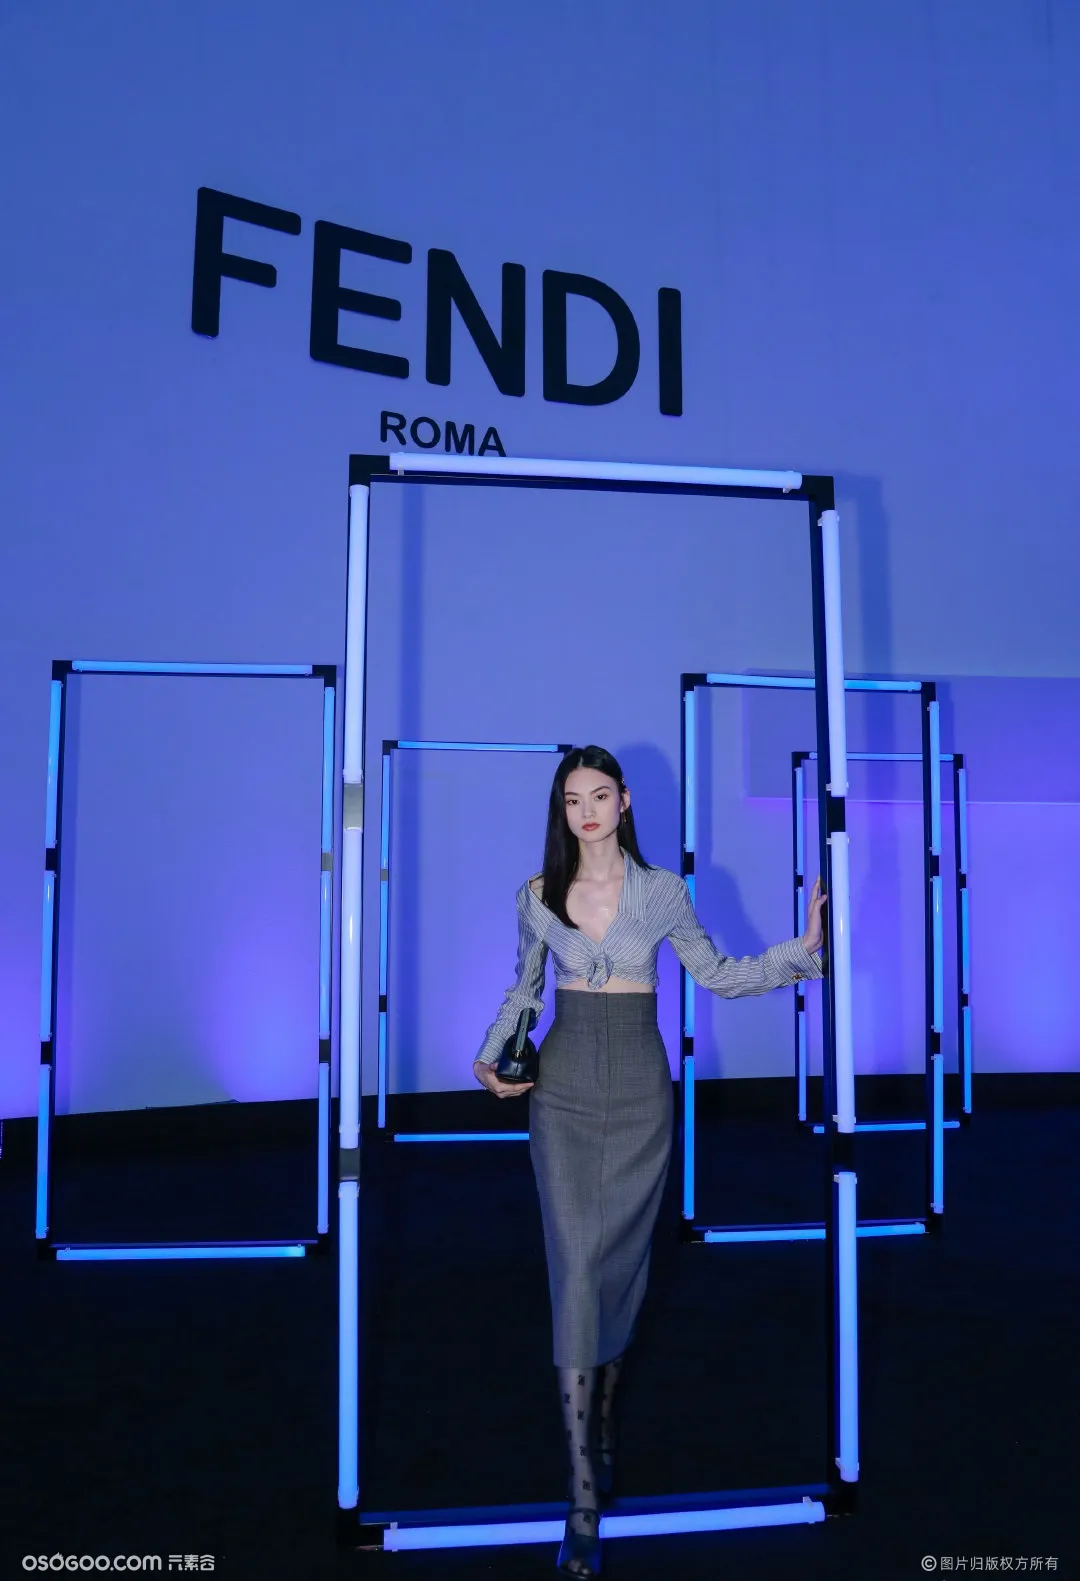 FENDI-霓虹光影镜像艺术派对